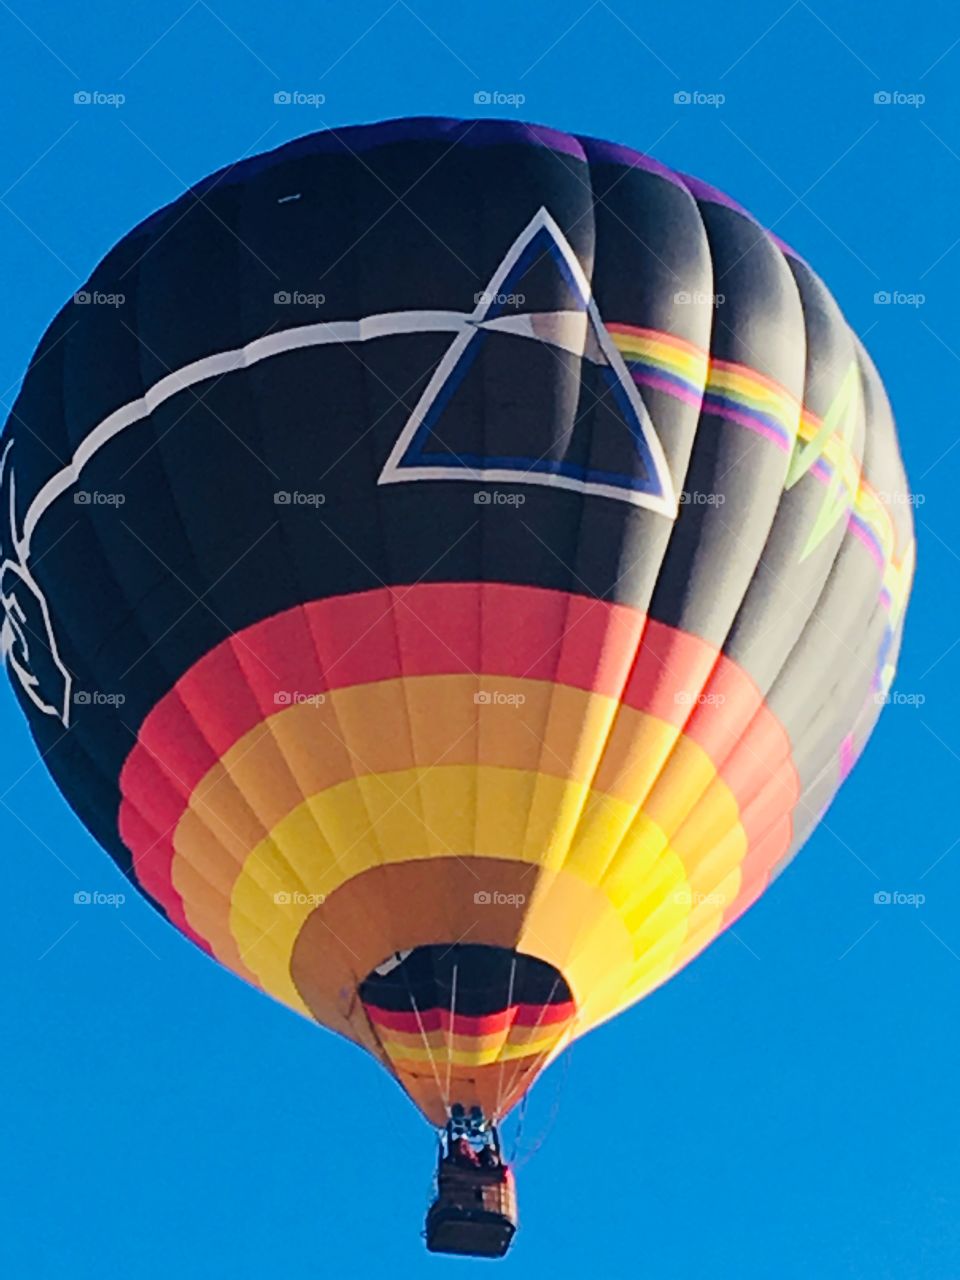 Morning Closeup if Hot Air Balloon